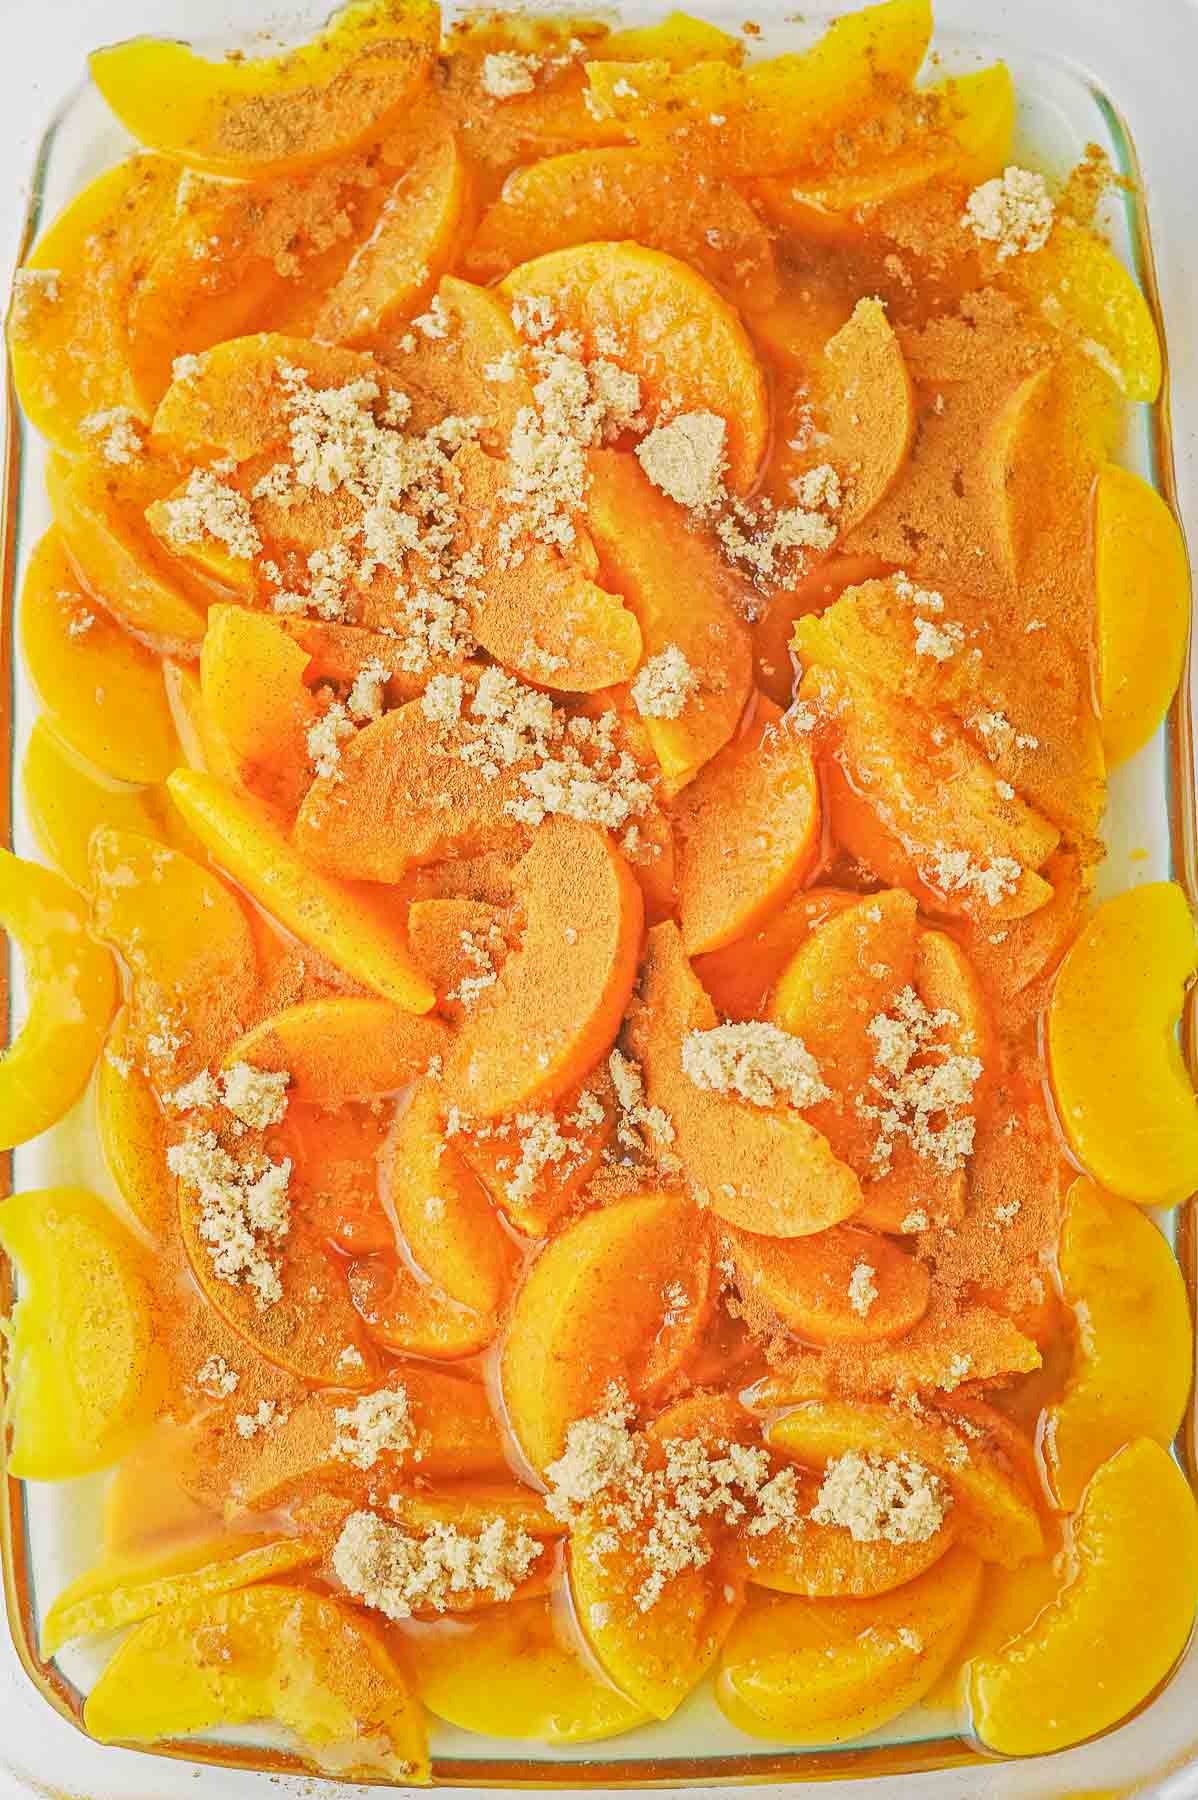 Brown sugar spread over peaches in glass baking dish.